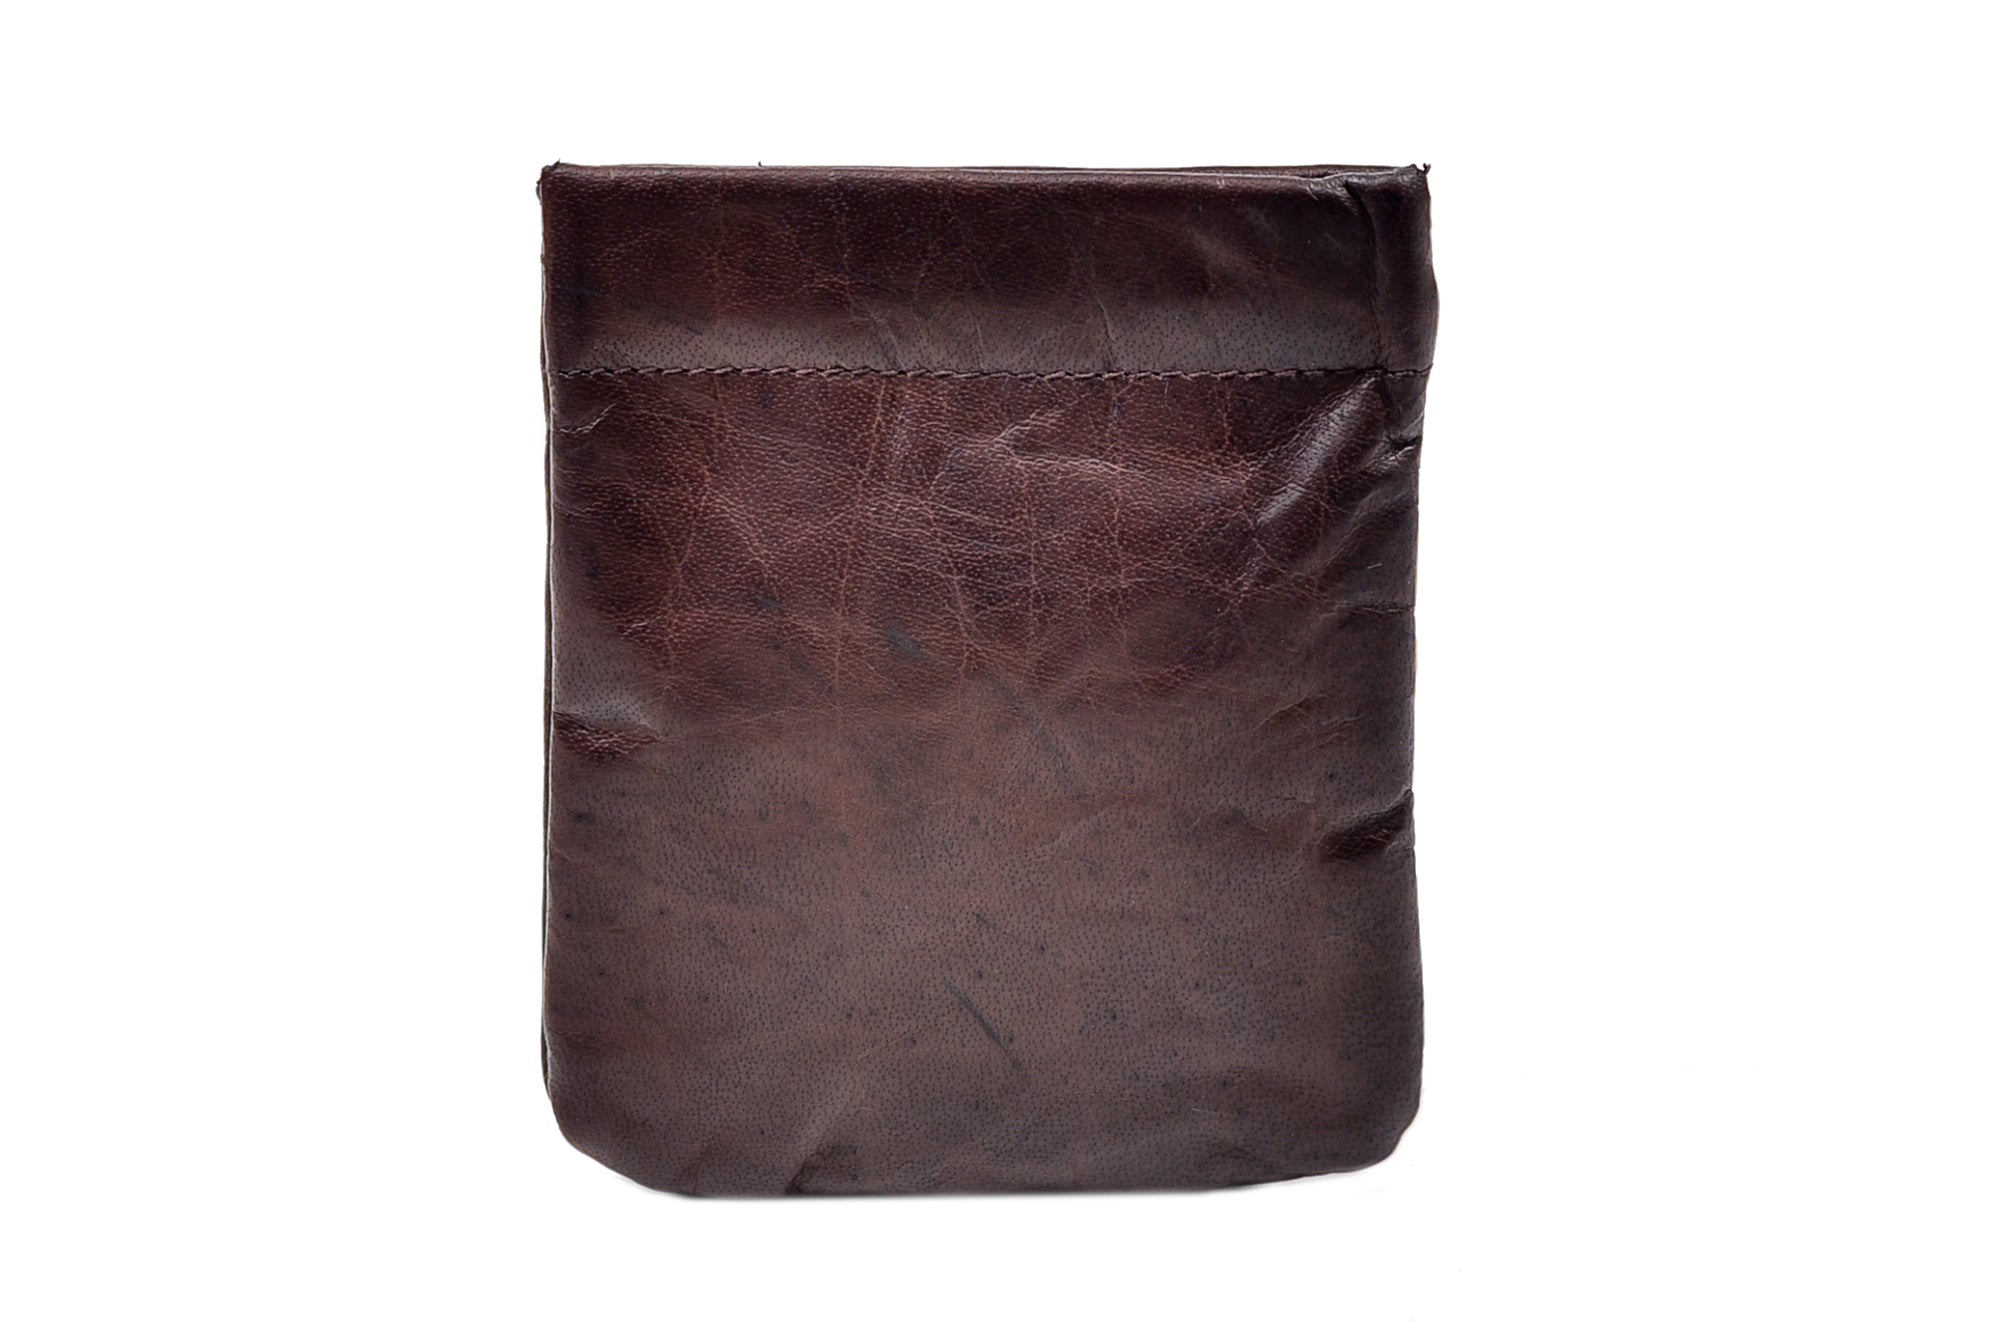 GAP Small Dark Brown Smooth Leather Purse - Crossover Shoulder Bag | eBay